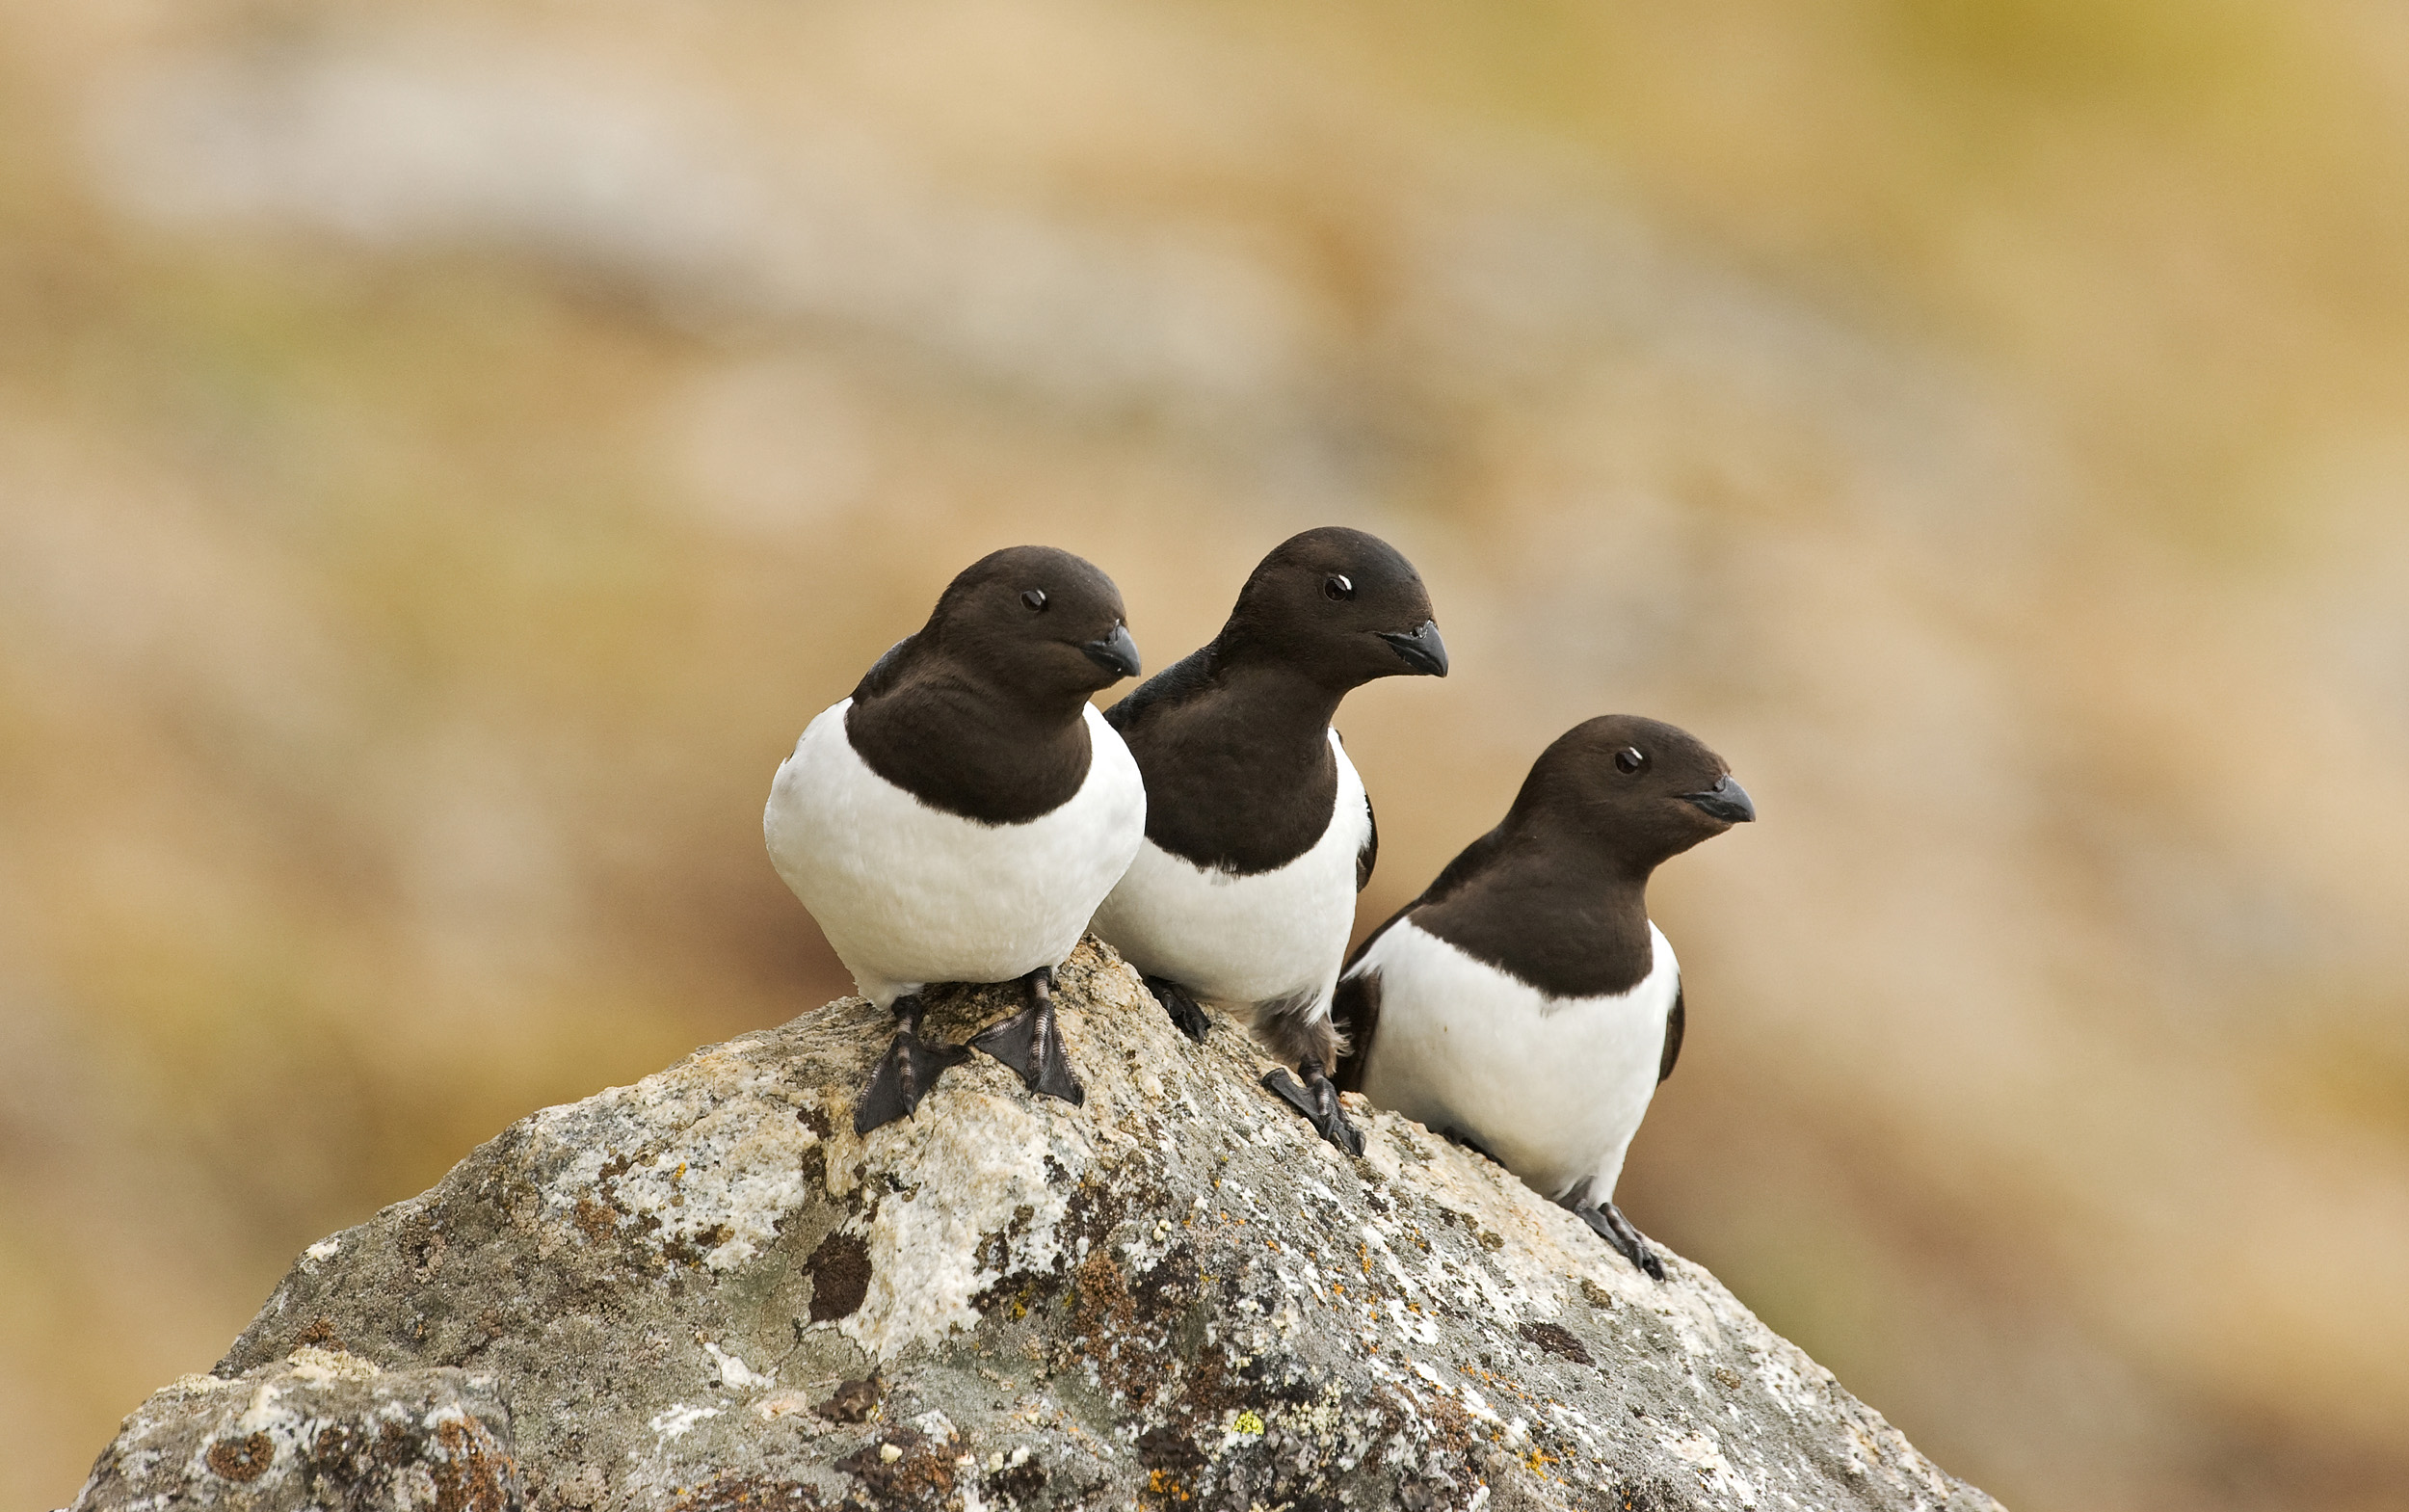 Three Little Auks sat together on a rock.